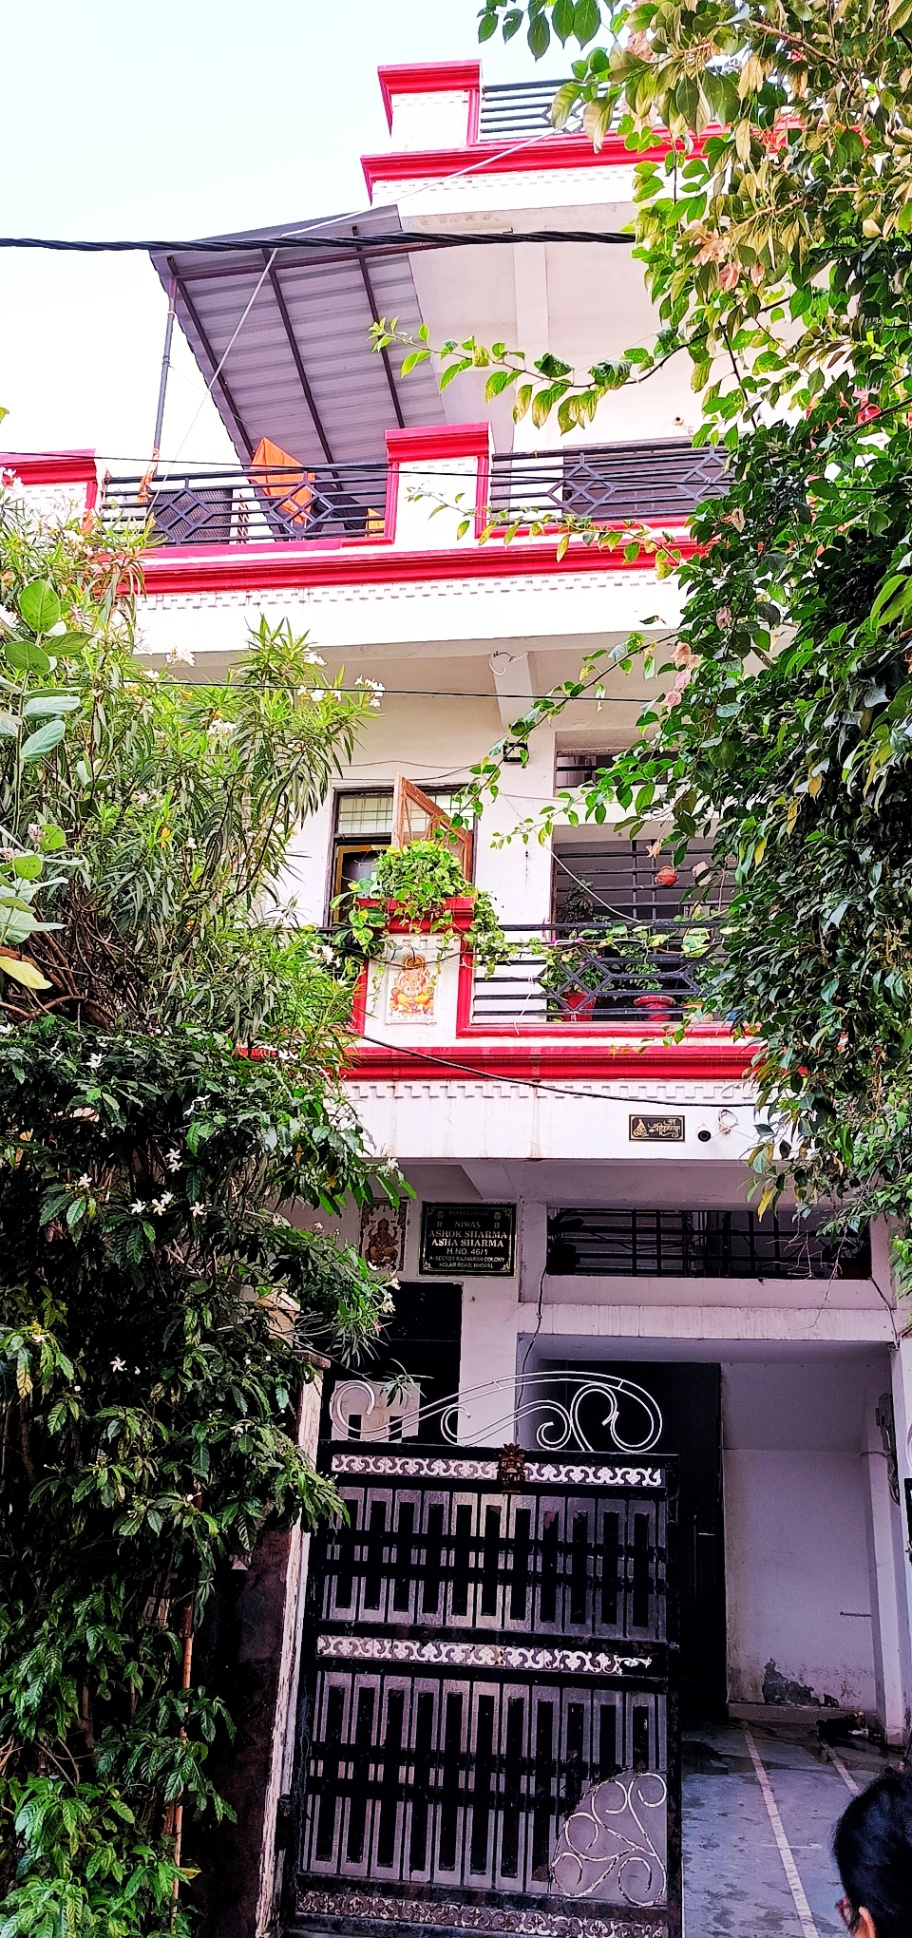 2 Bed/ 2 Bath Rent Apartment/ Flat; 1,200 sq. ft. carpet area, Semi Furnished for rent @LALITA NAGAR kolar road bhopal 